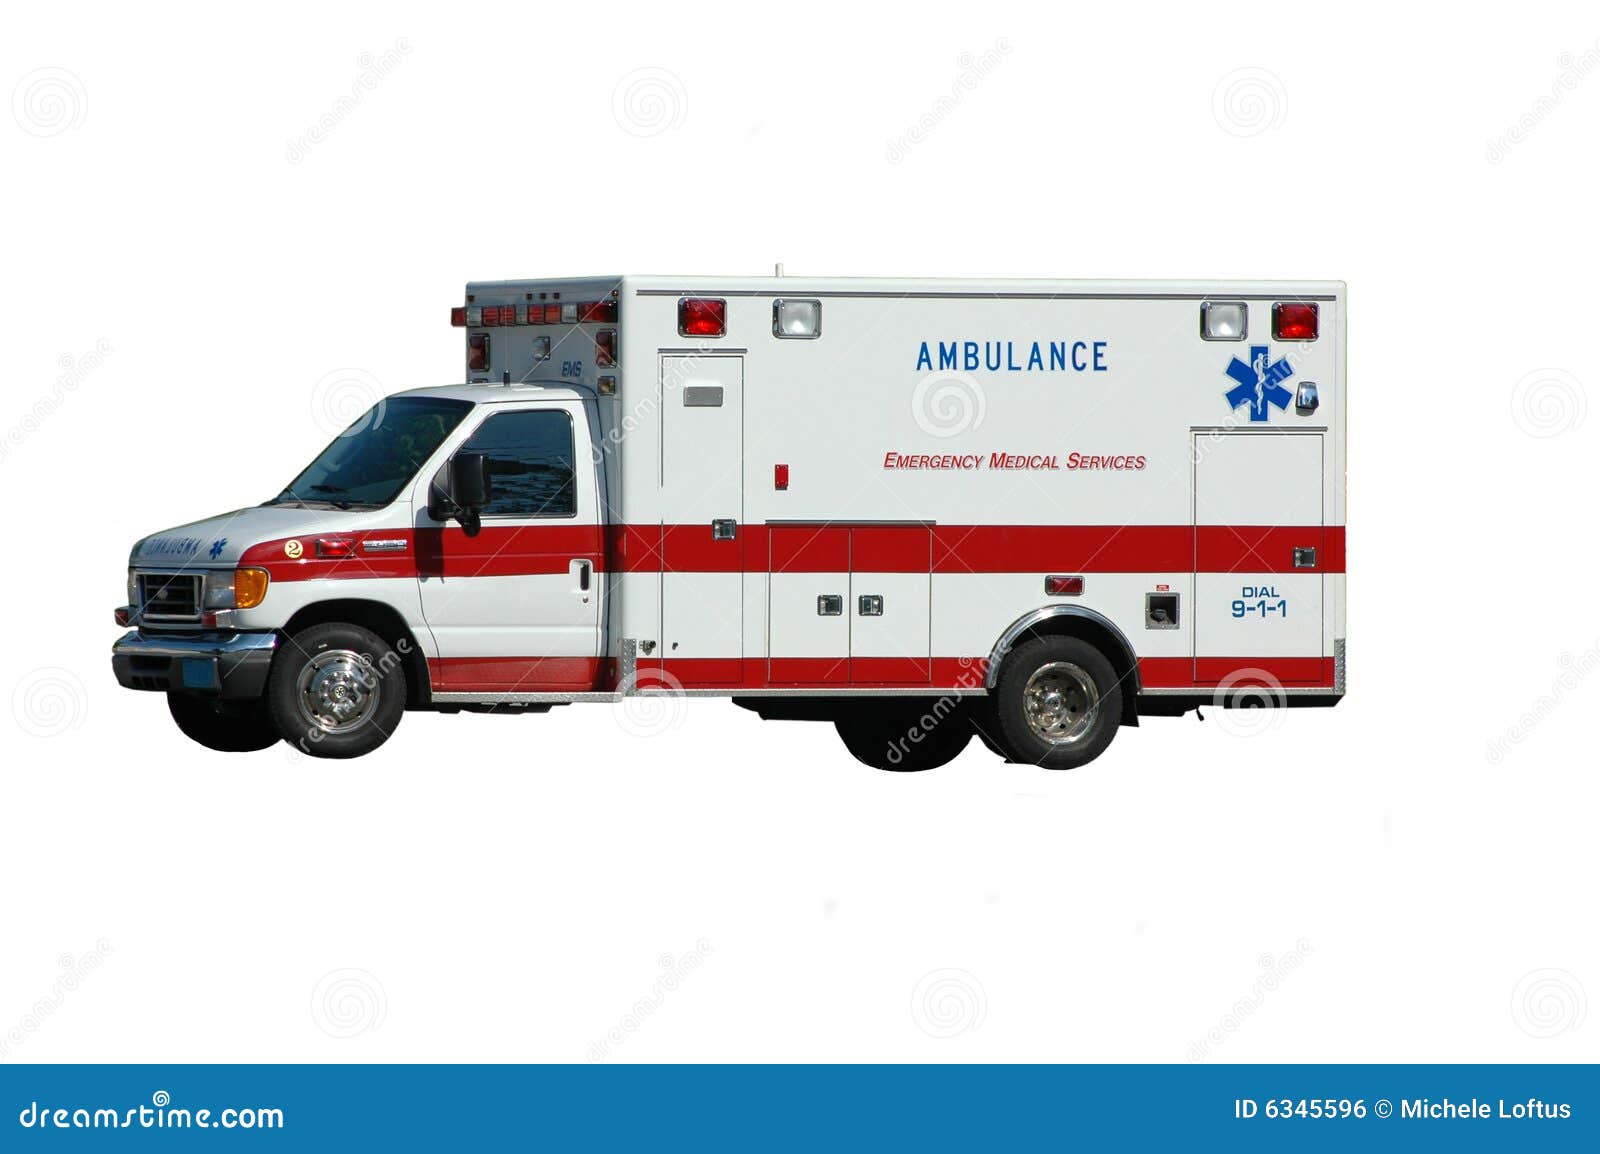 ambulance  on white